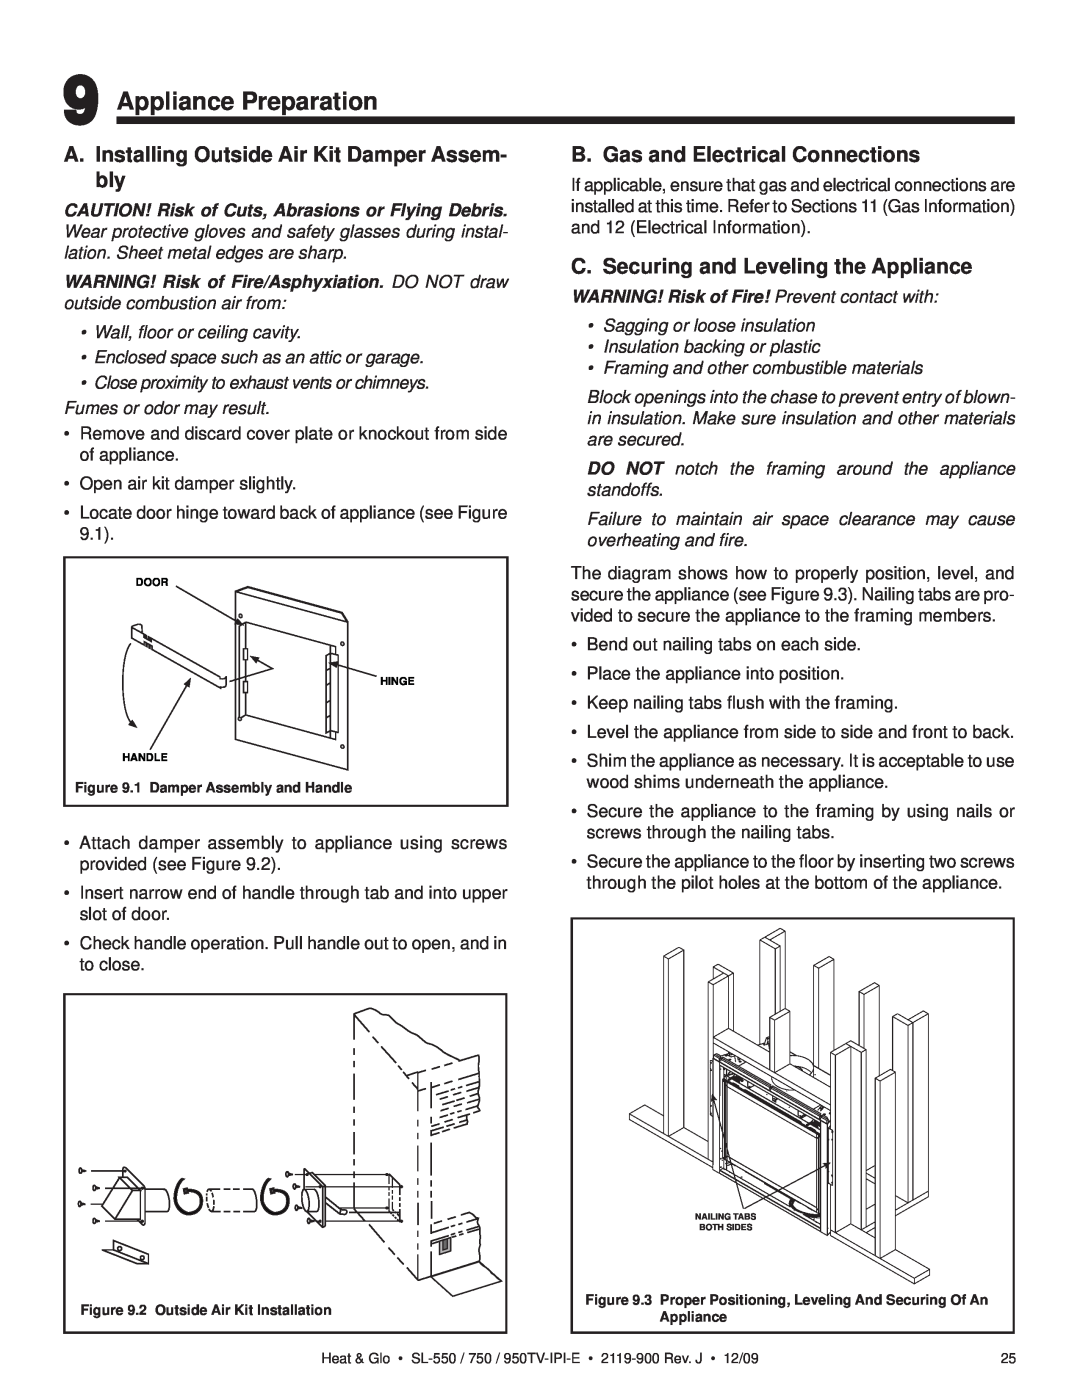 Heat & Glo LifeStyle SL-750TV-IPI-E, SL-950TV-IPI-E Appliance Preparation, A.Installing Outside Air Kit Damper Assem- bly 